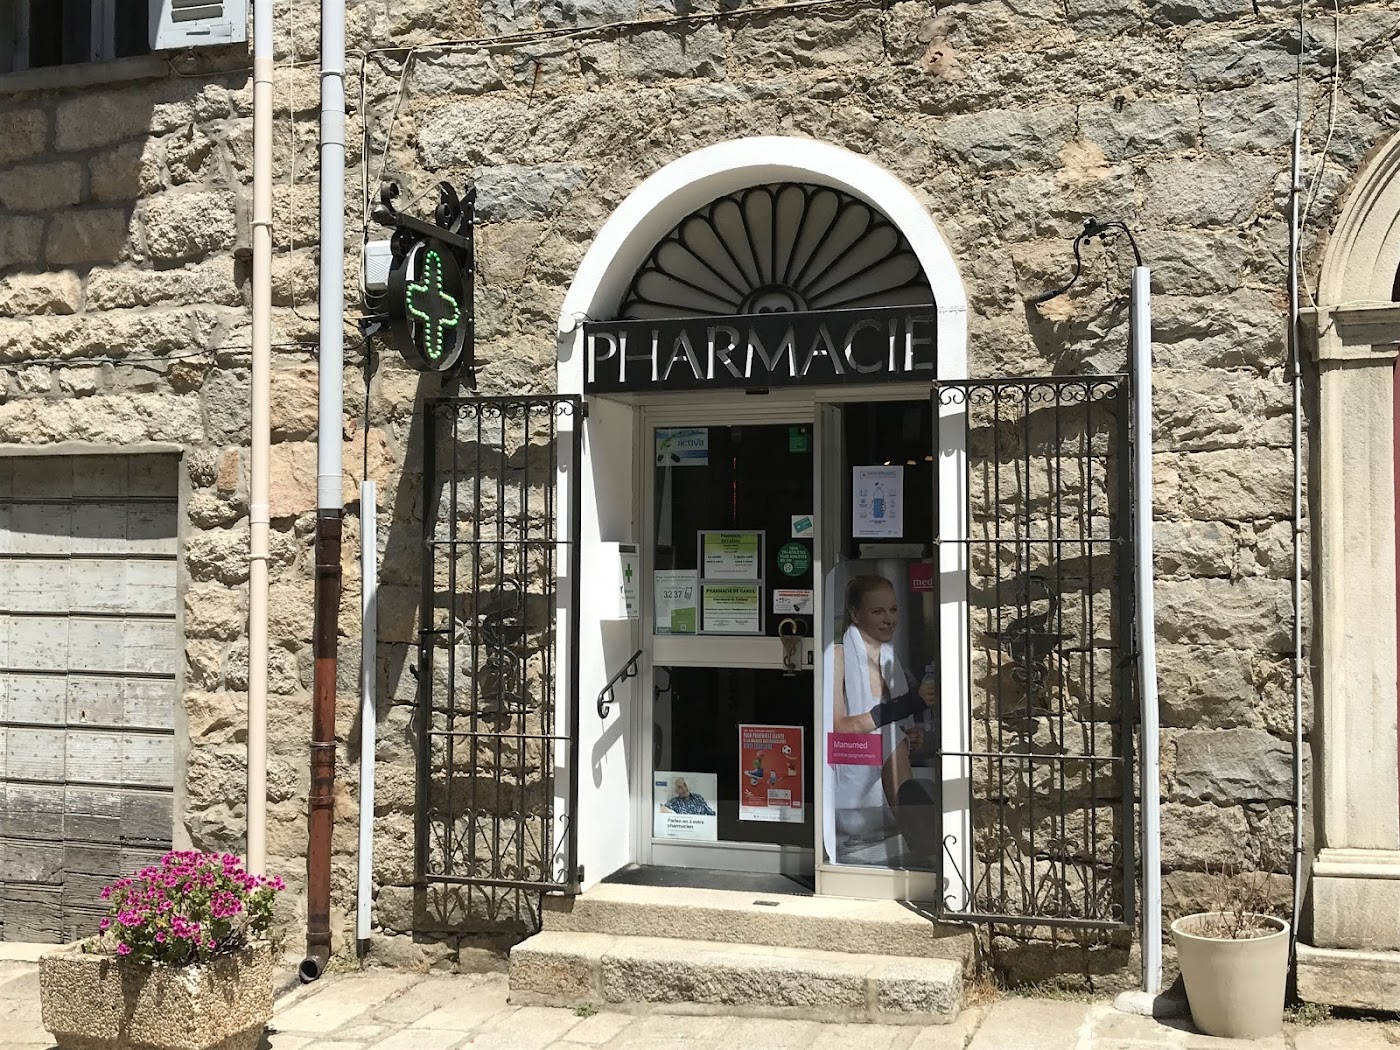 Pharmacie De Tallano